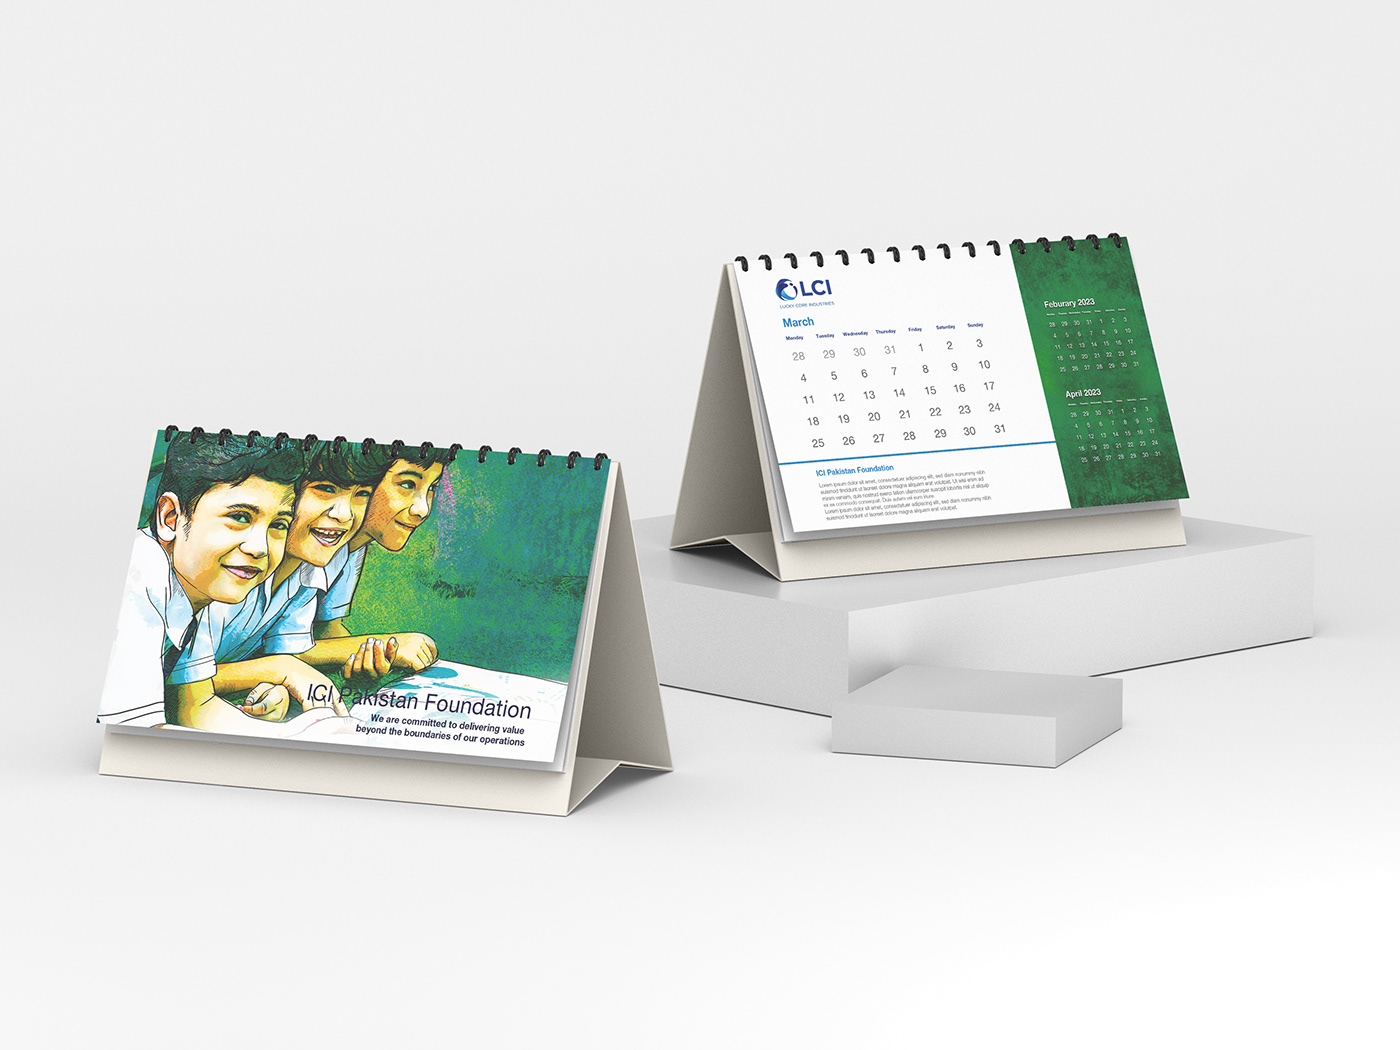 options pitch deck ILLUSTRATION  photocollage calendar ICI Pakistan Polyester corporate Corporate Identity mixmedium